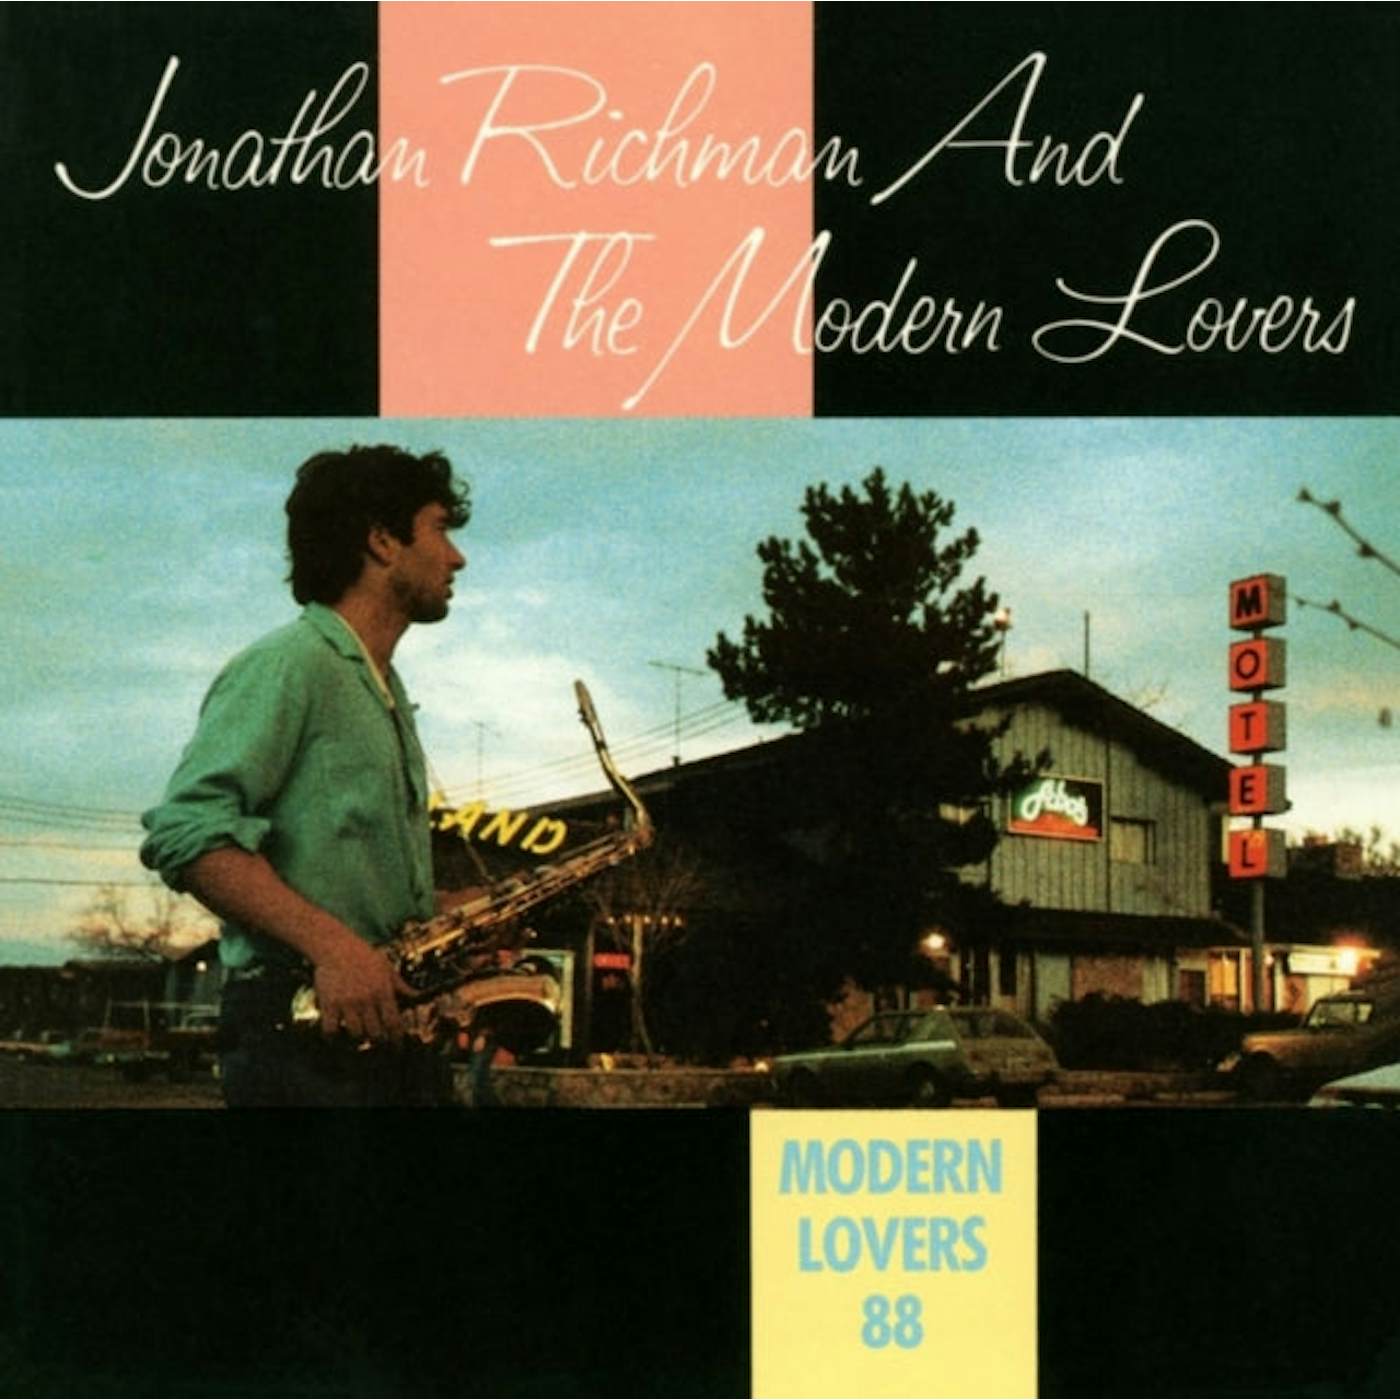 Jonathan Richman & The Modern Lovers LP Vinyl Record - Modern Lovers 88 (Rsd 20. 22)